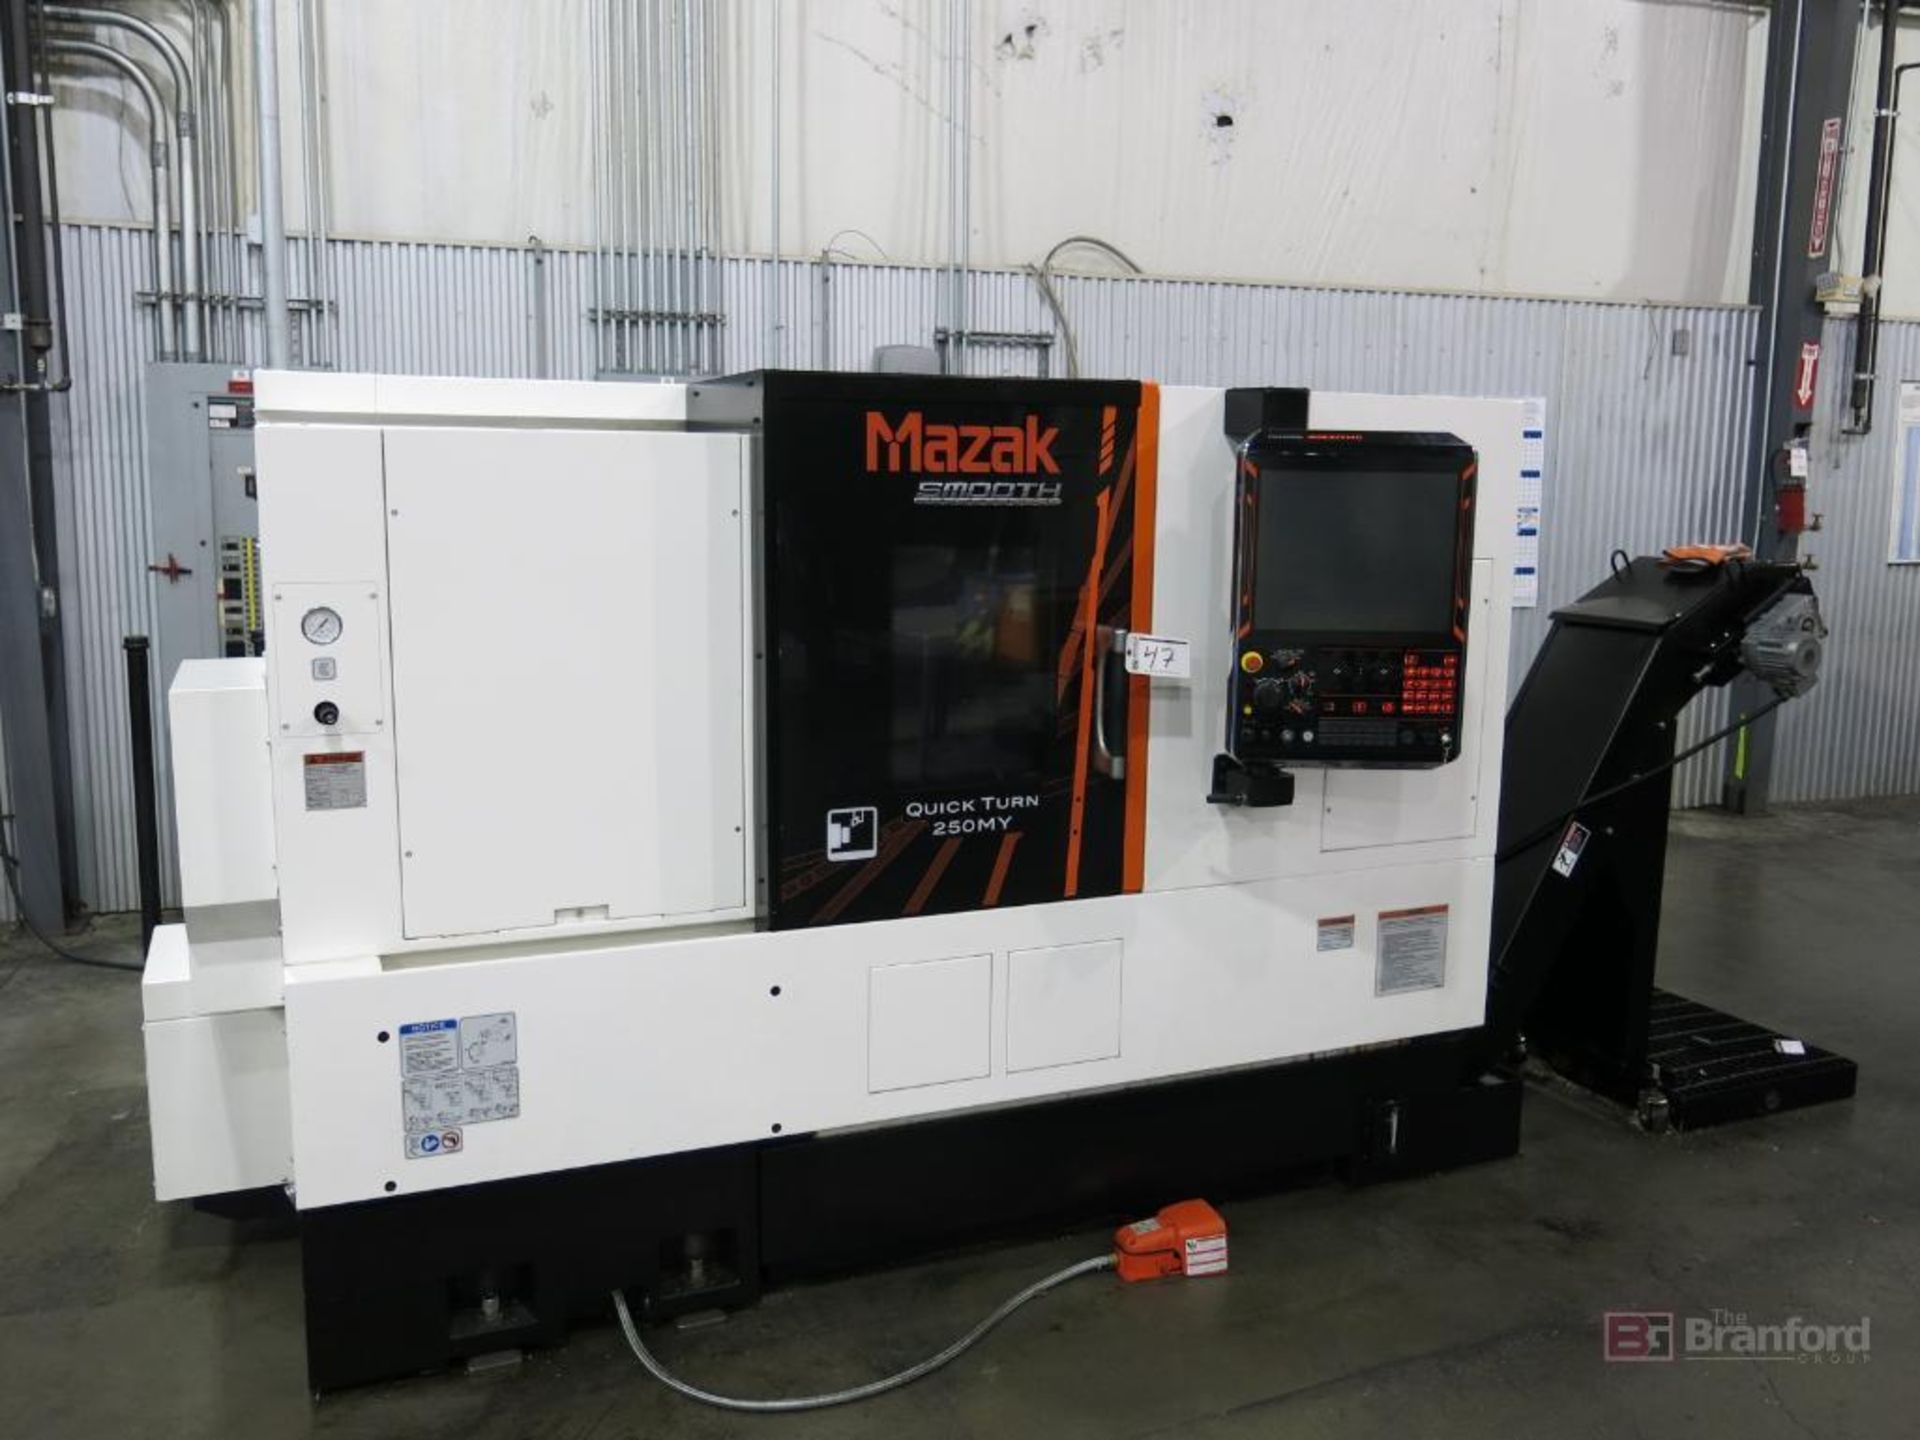 Mazak Quickturn Model 250MY CNC Turning Center, w/ Mazak Smooth G CNC Controls - Image 2 of 7